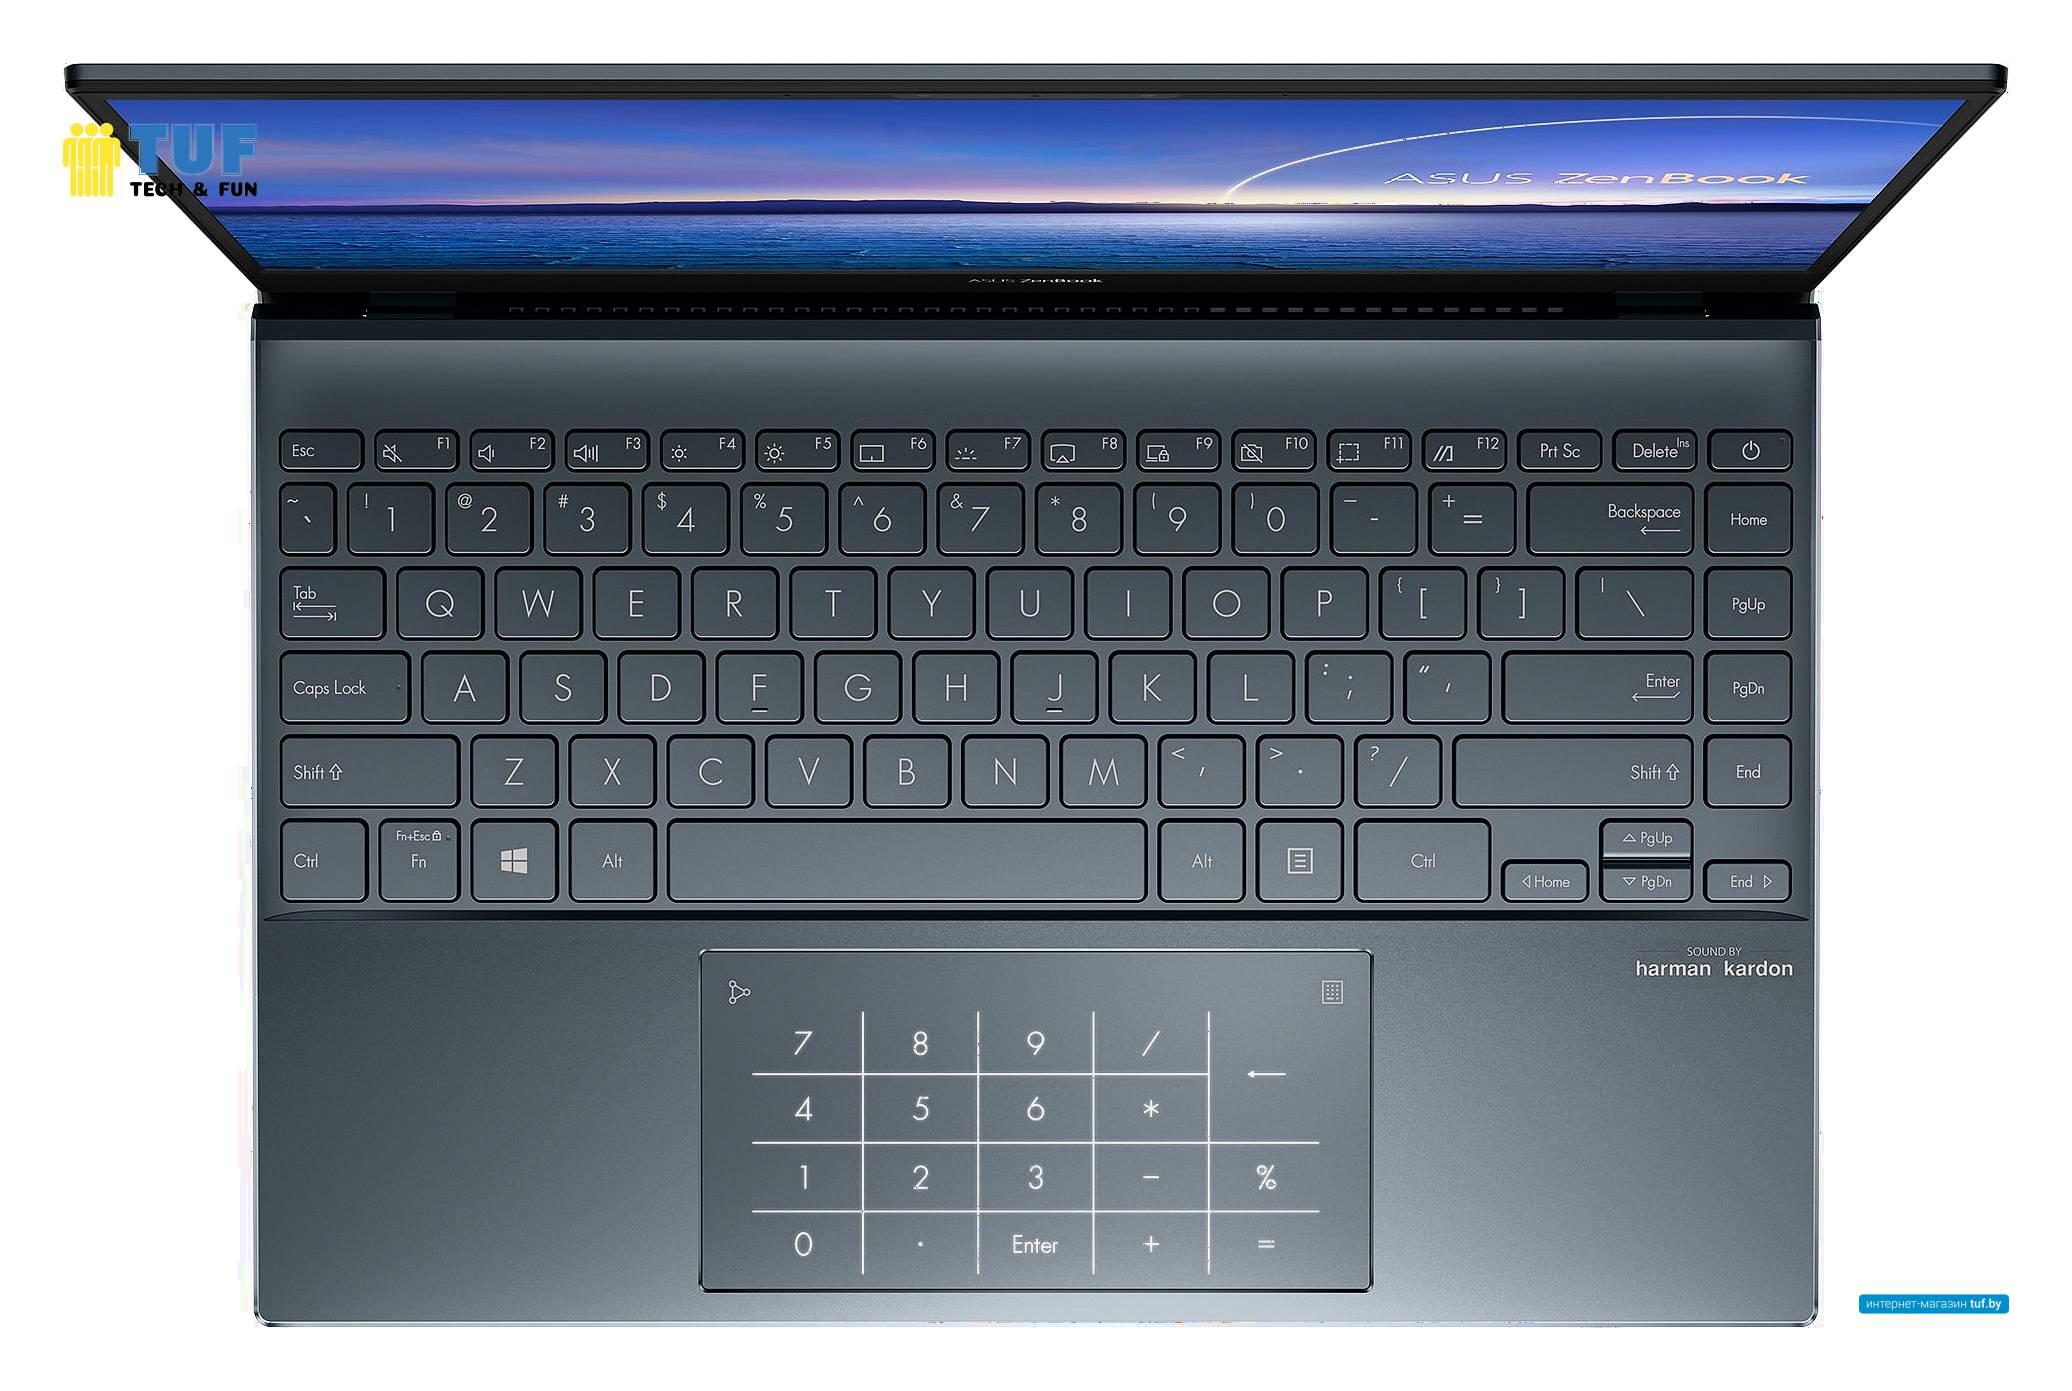 Ноутбук ASUS ZenBook 13 UX325EA-KG777